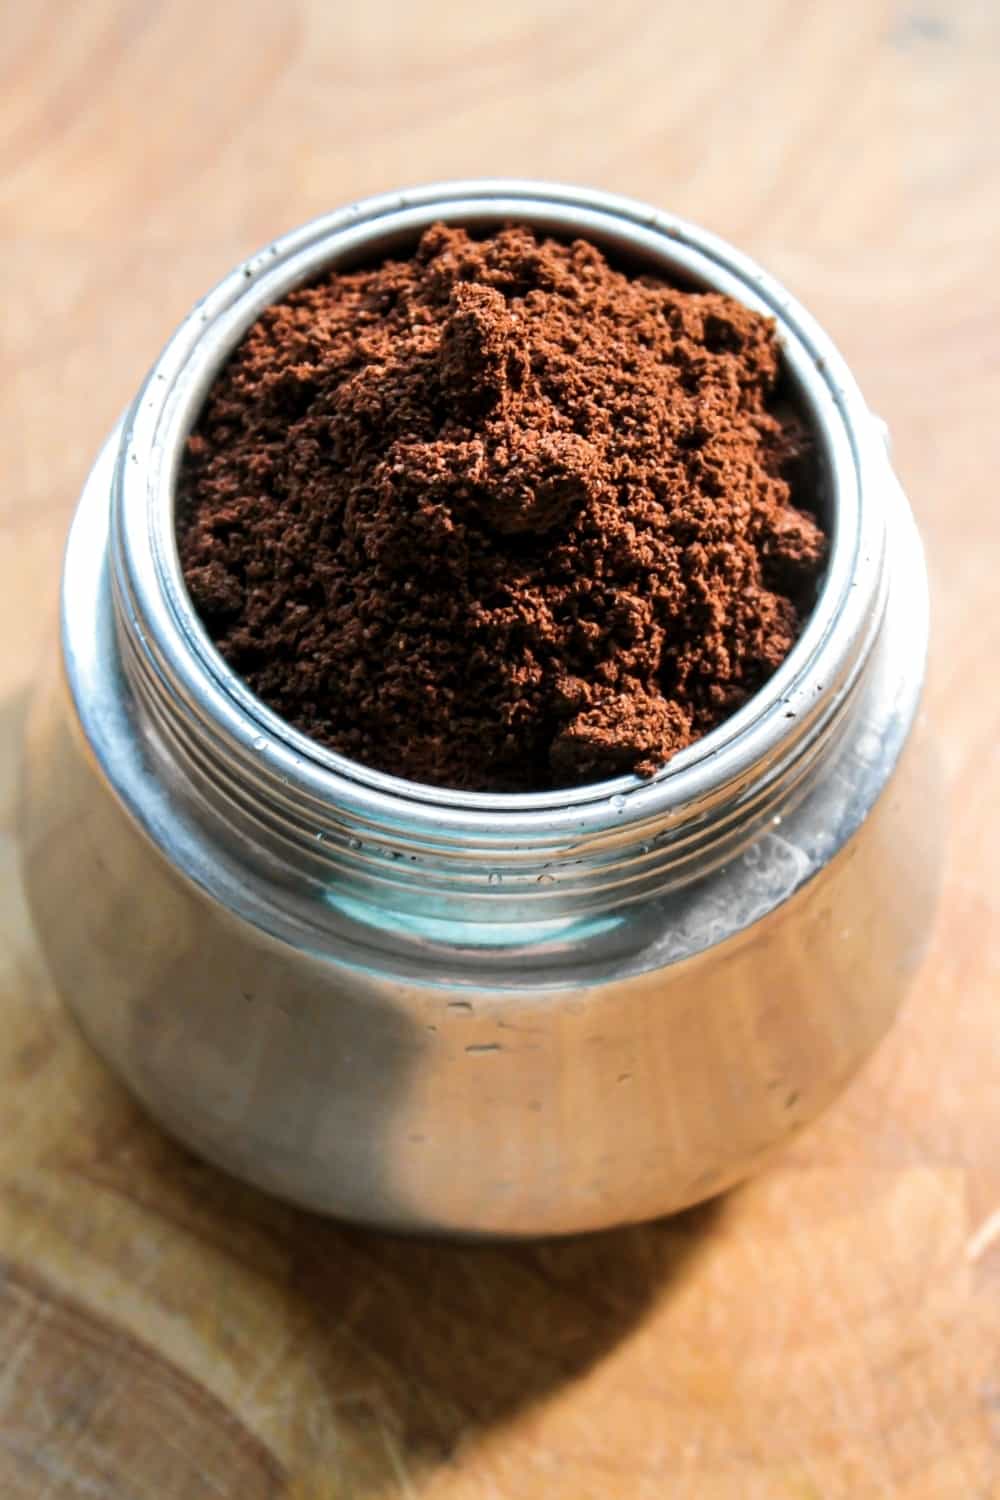 Freshly ground espresso powder in an old espresso machine.